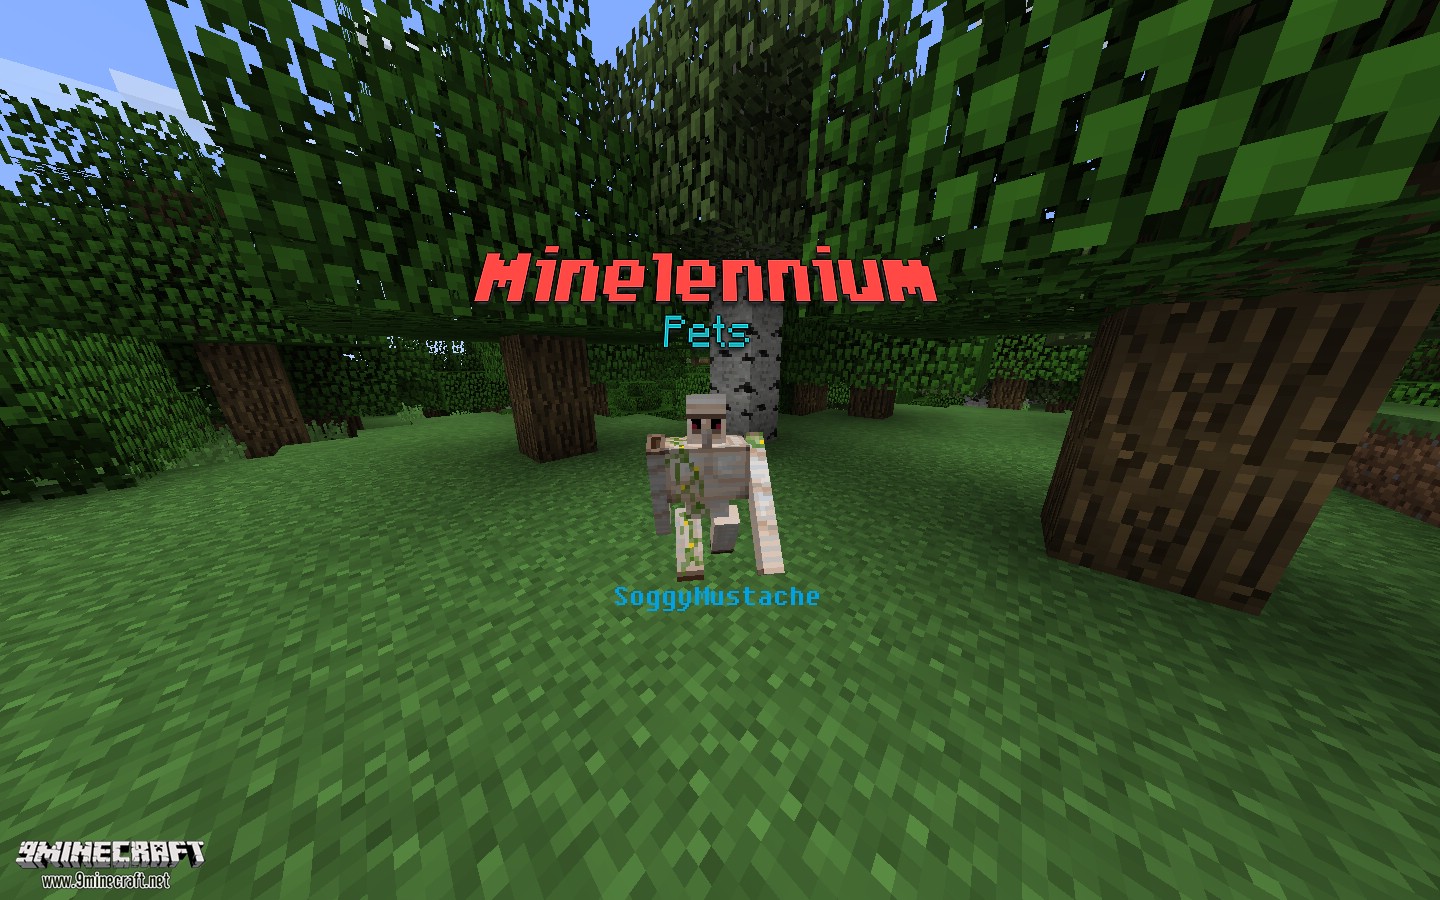 Minelennium-Pets-Mod-3.jpg